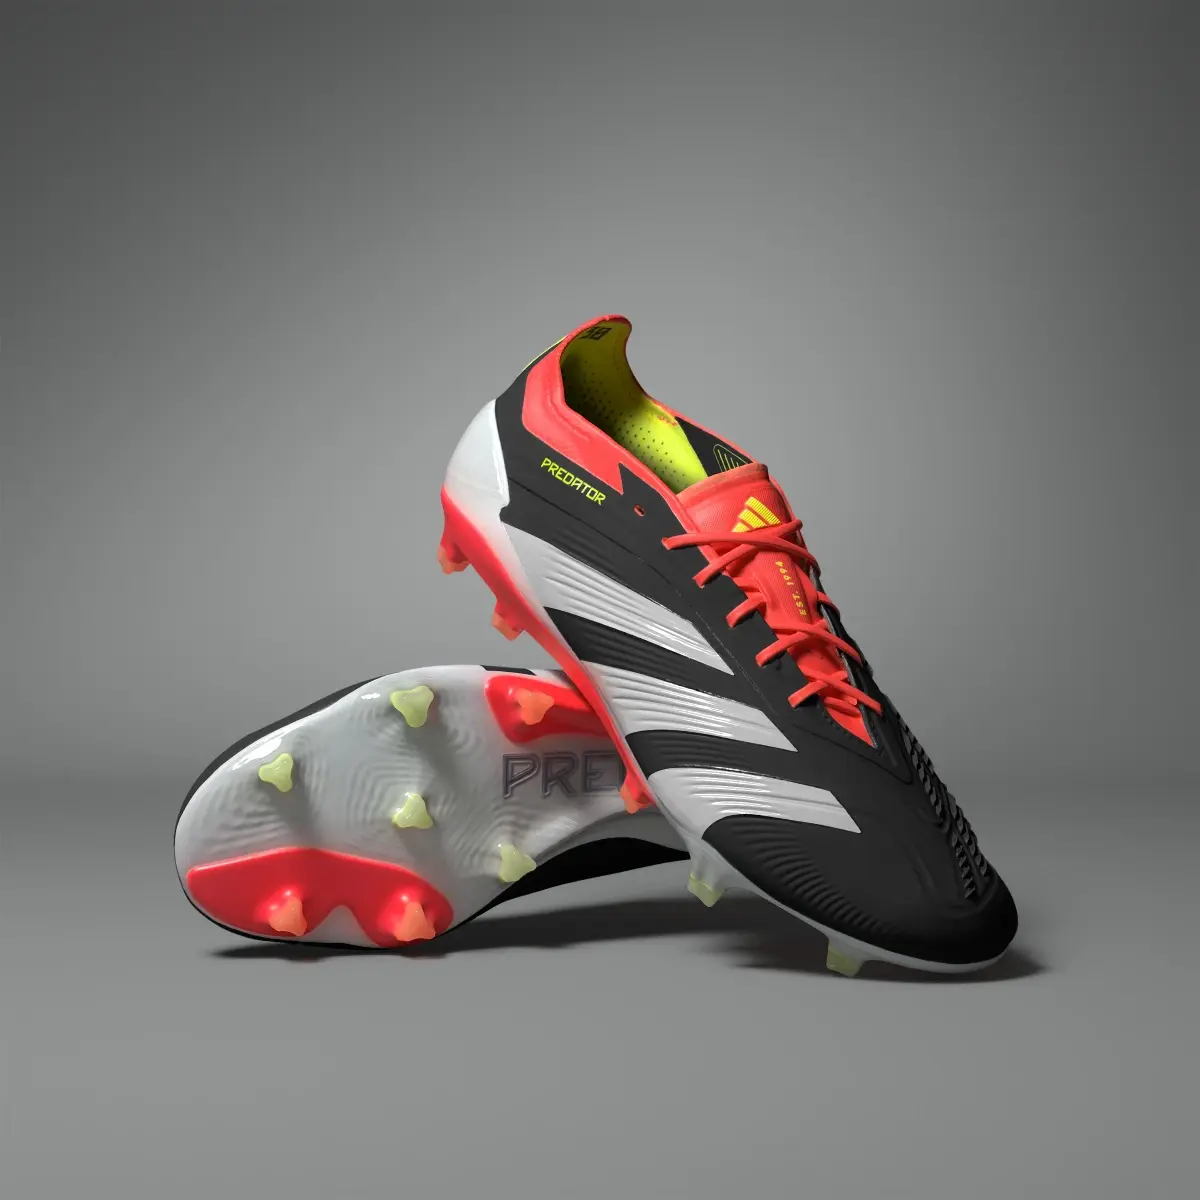 Adidas Predator Elite Firm Ground Football Boots. 1